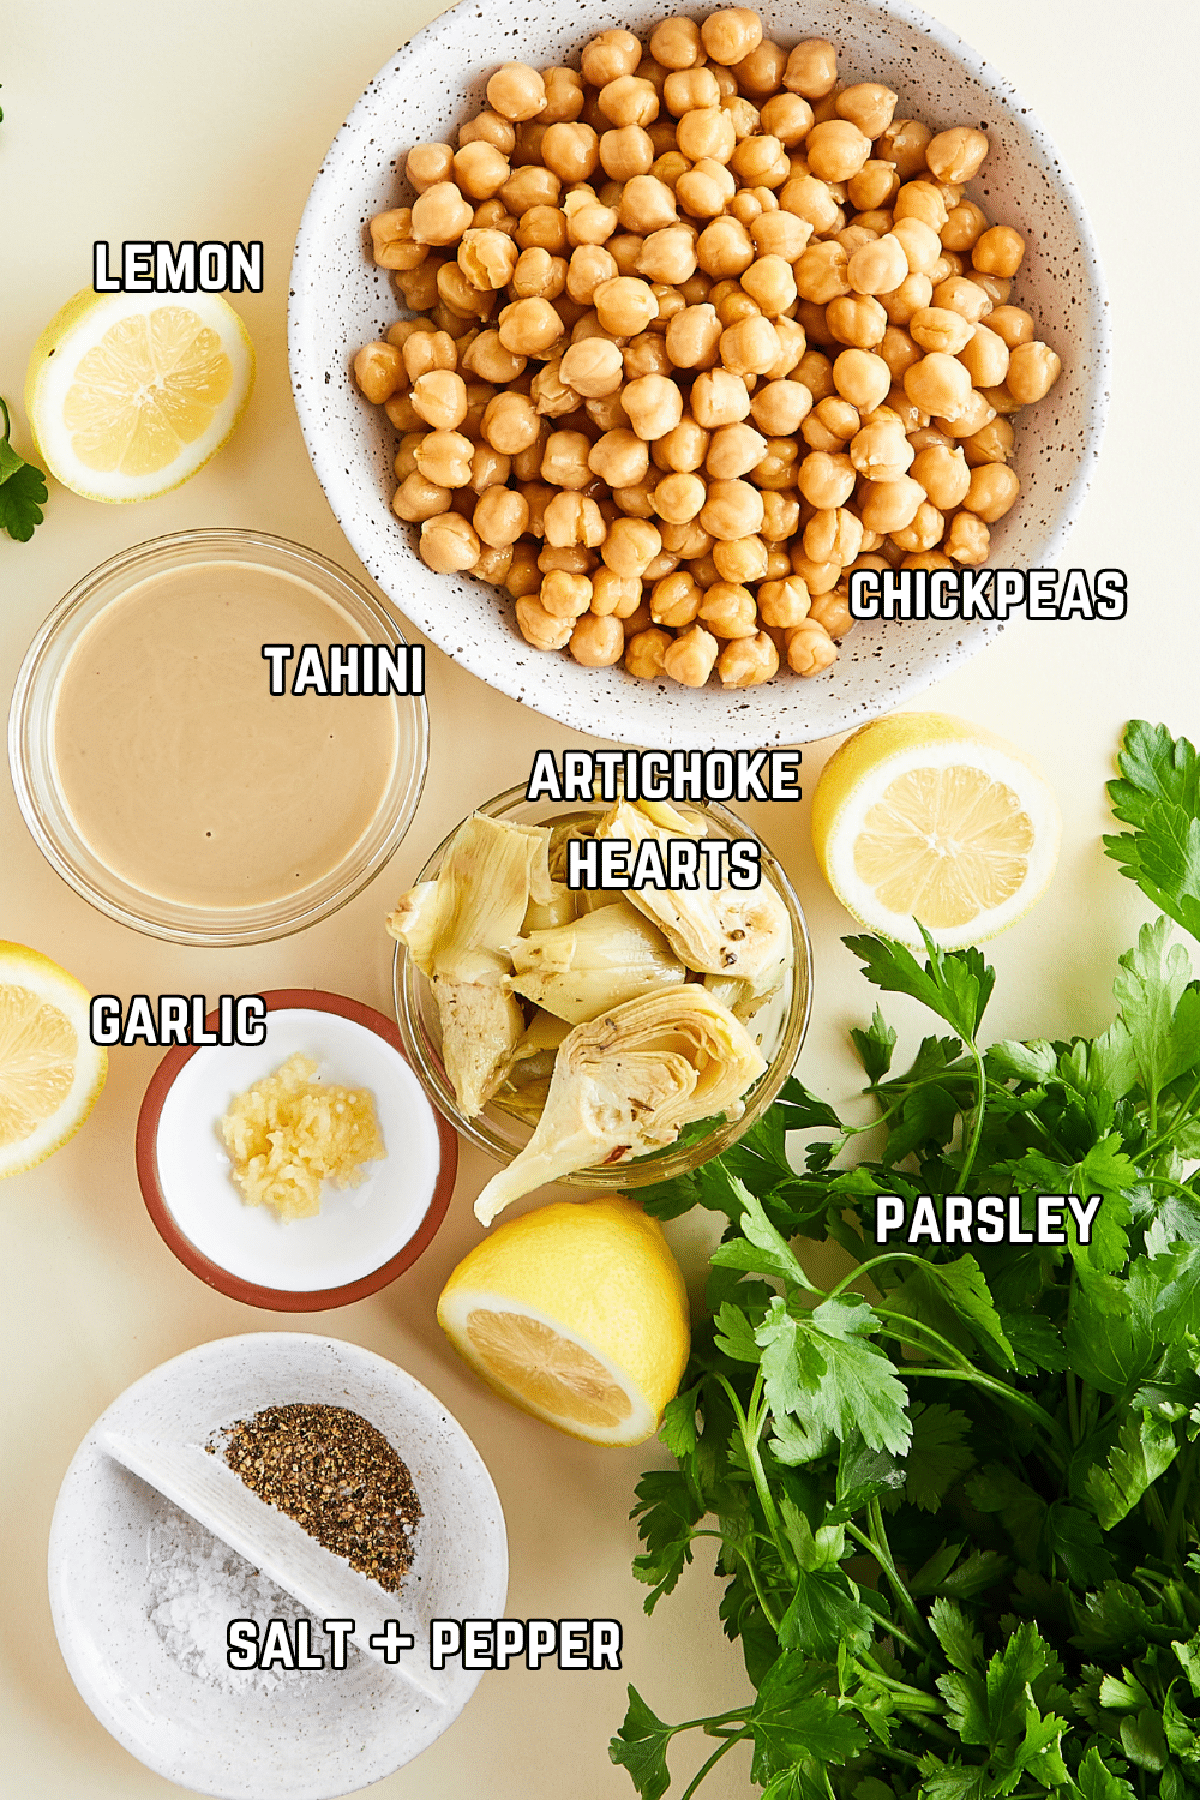 Ingredients to make artichoke hummus: chickpeas, lemon, tahini, artichoke hearts, garlic, parsley, and seasonings.